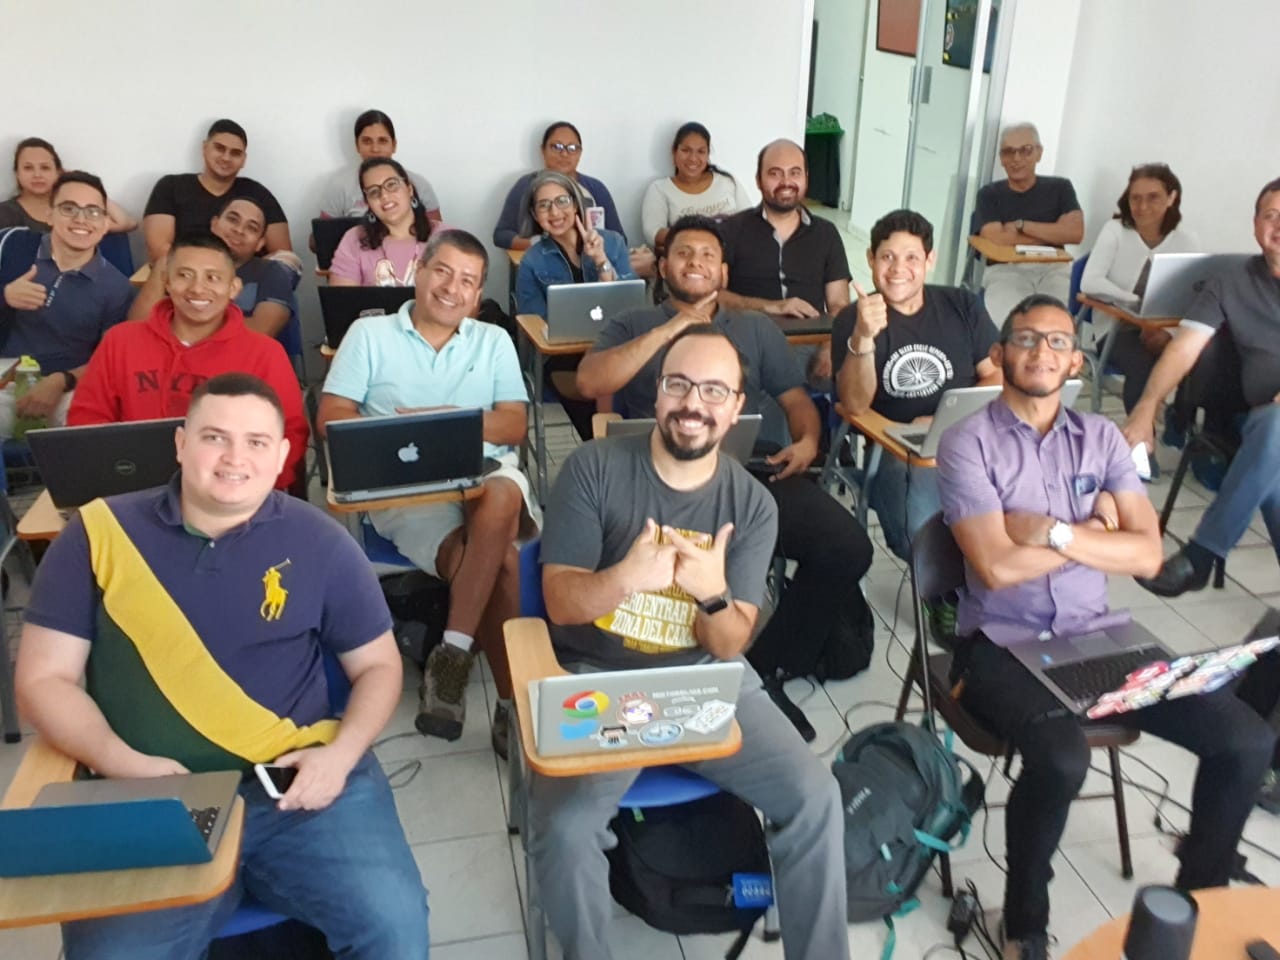 Panama WordPress Community - Meeting